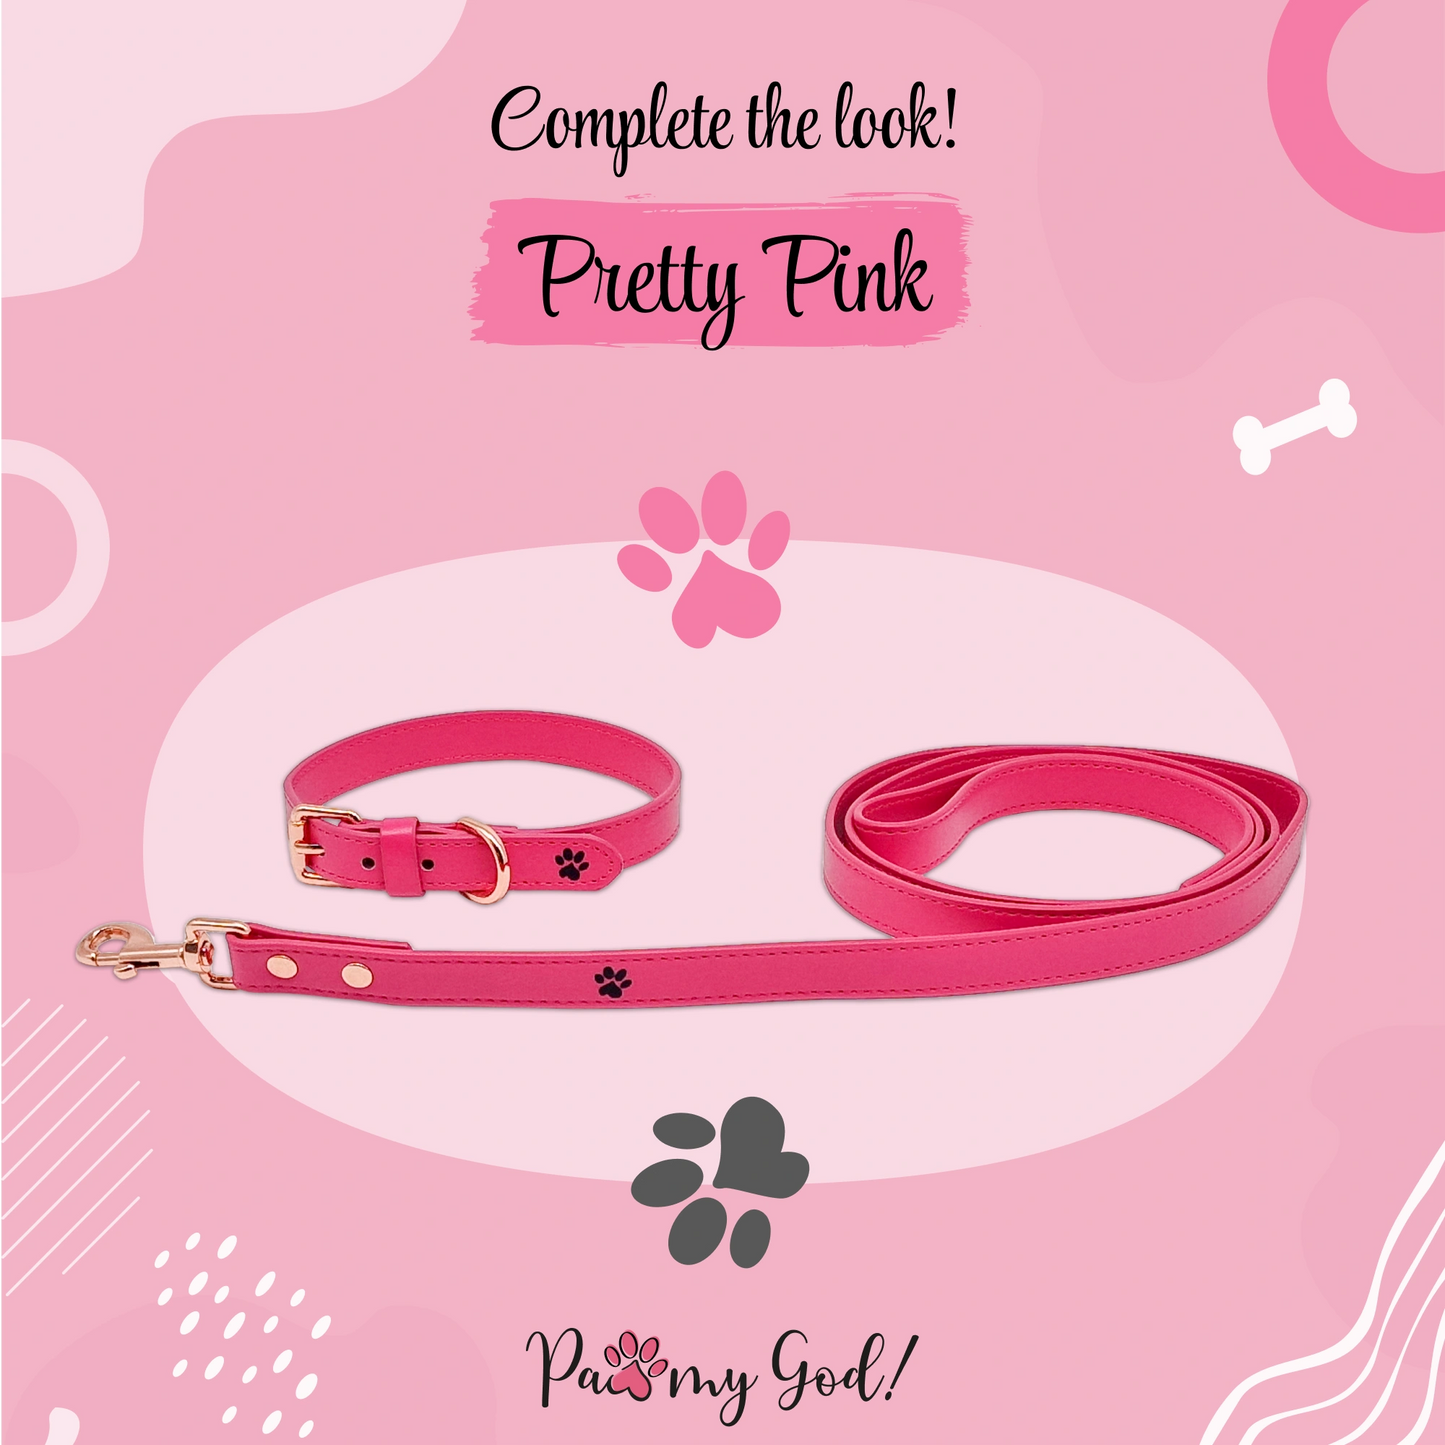 Pretty Pink Collier